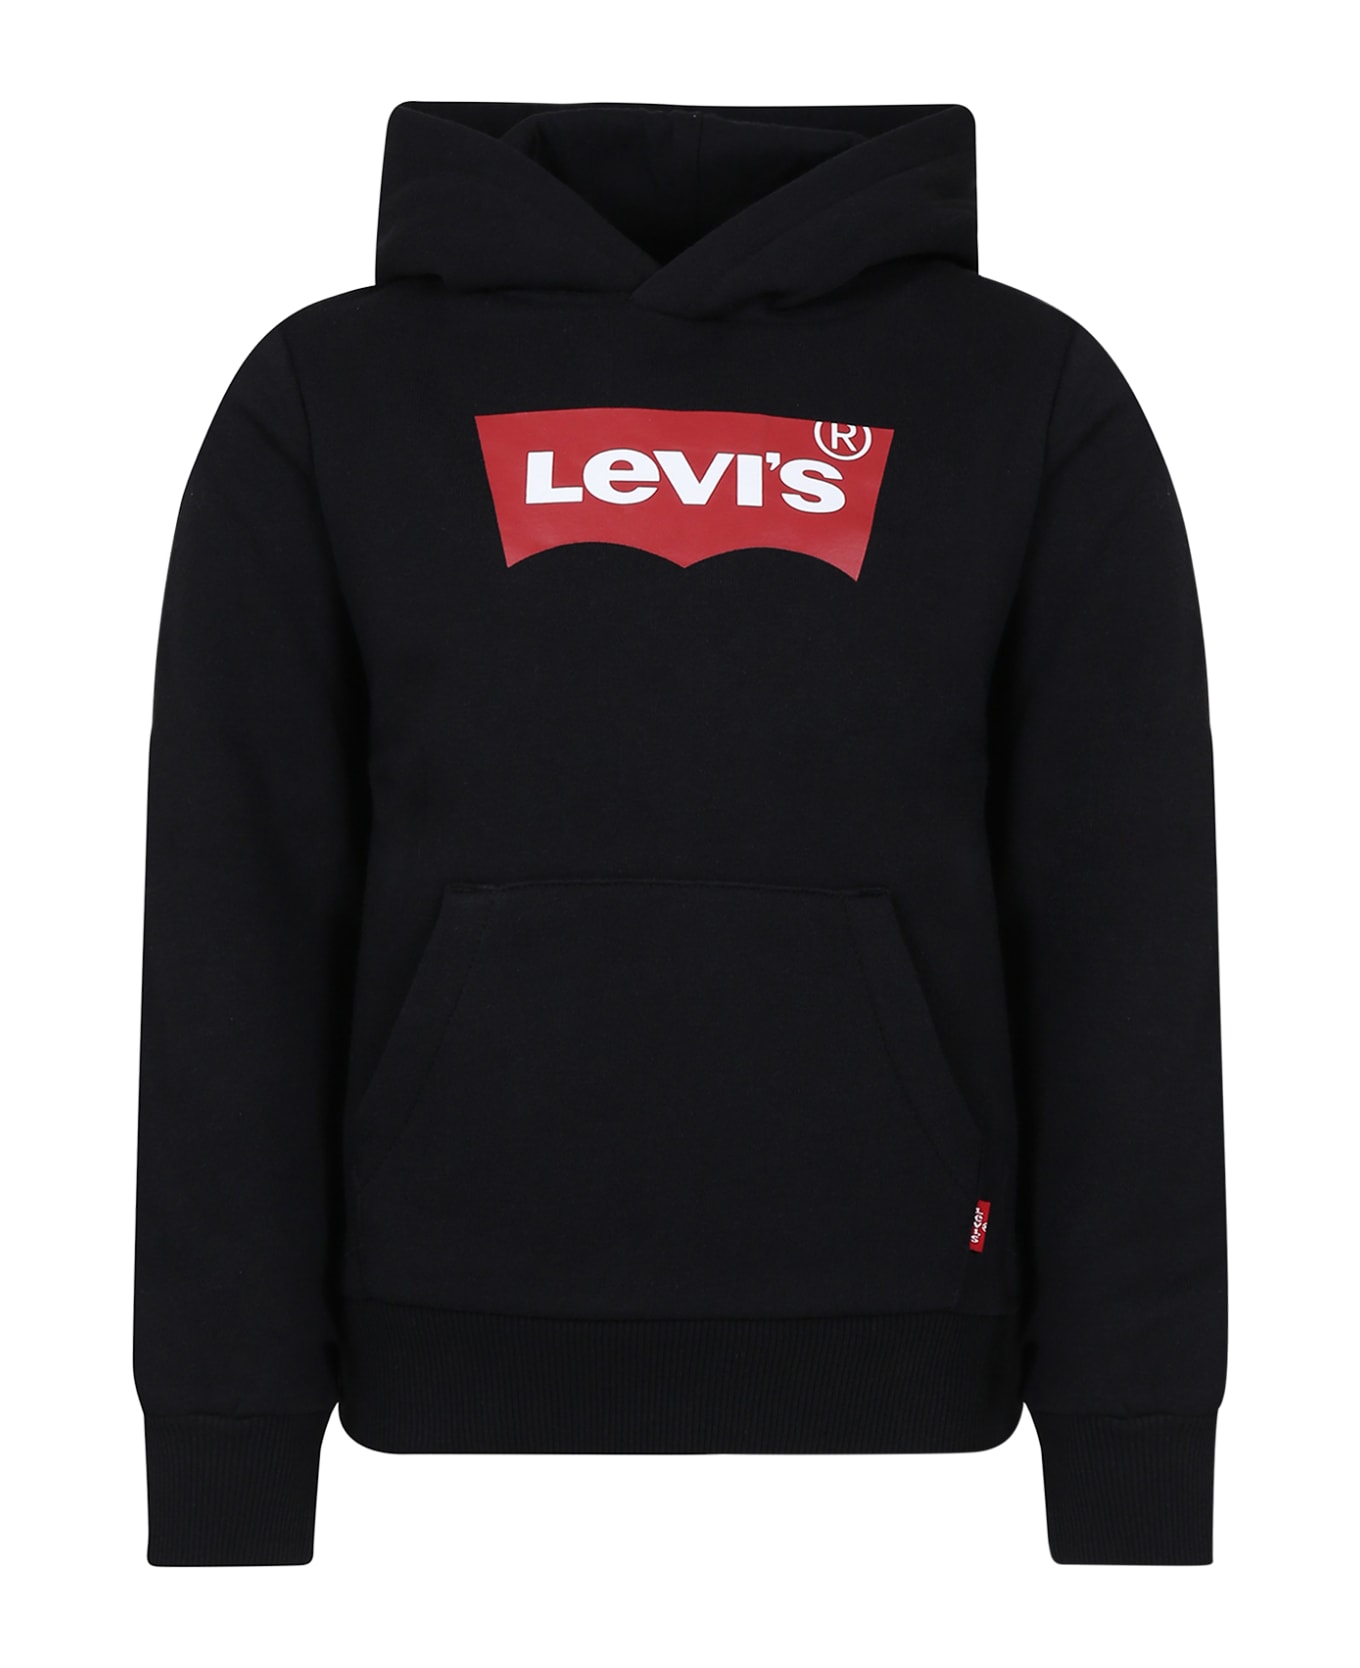 Levi's Black Sweatshirt For Boy With Logo - Black